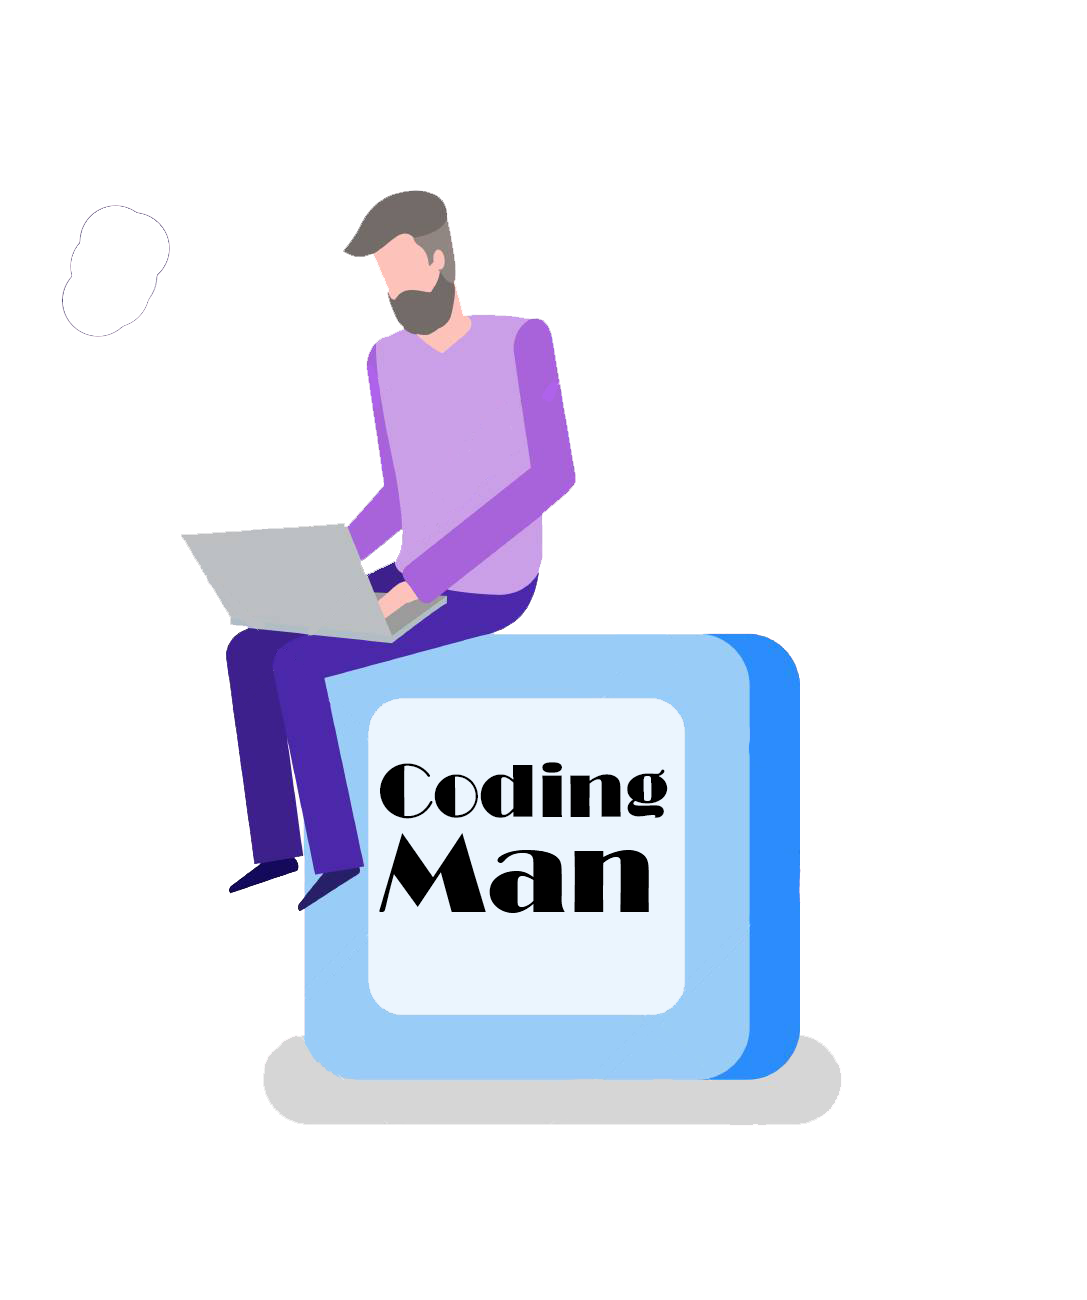 Coding man